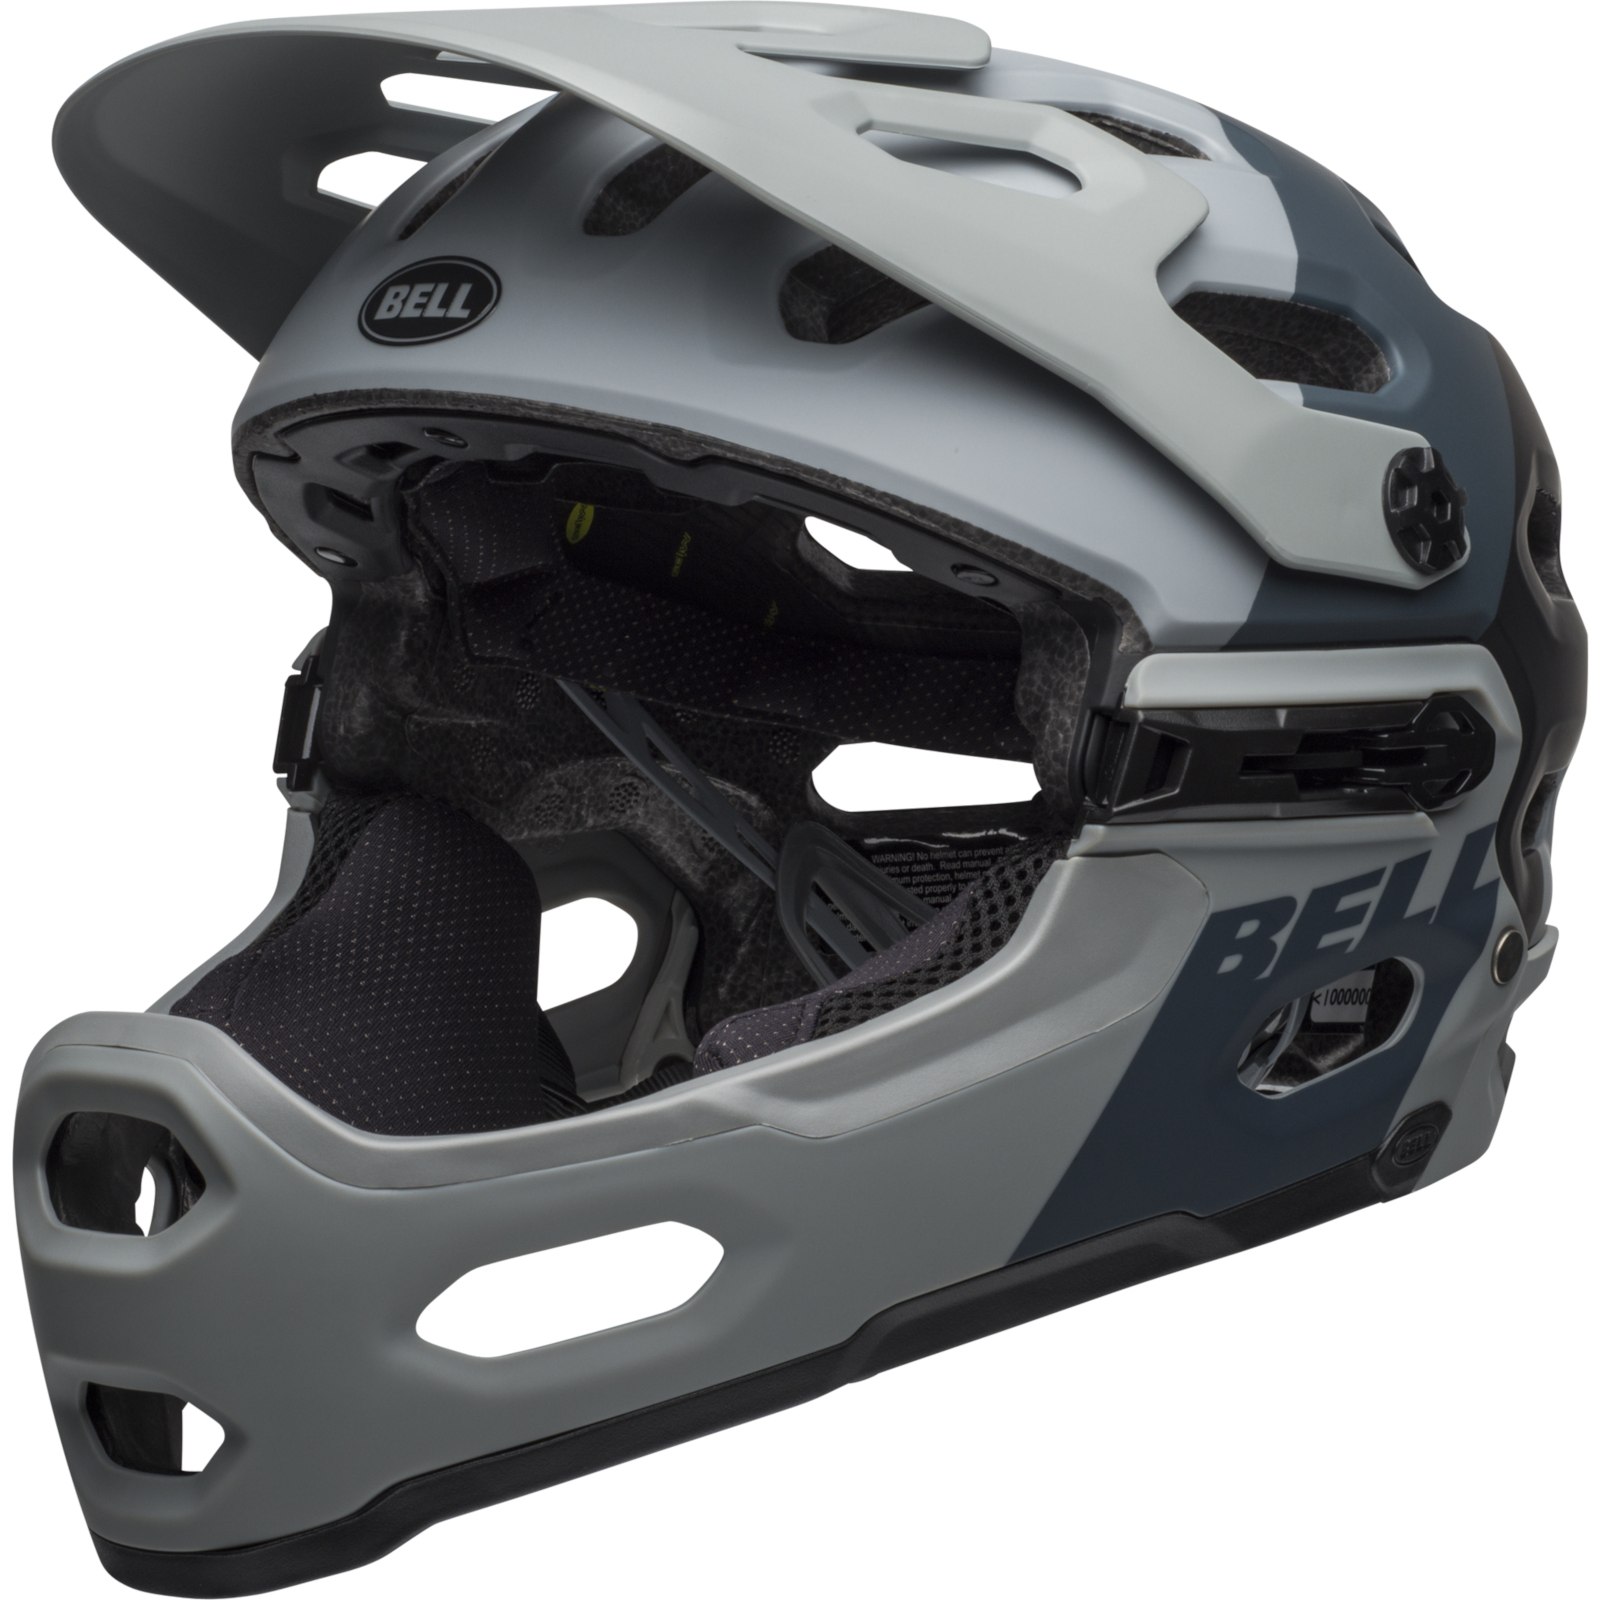 Produktbild von Bell Super 3R MIPS Helm - downdraft matte gray/gunmetal